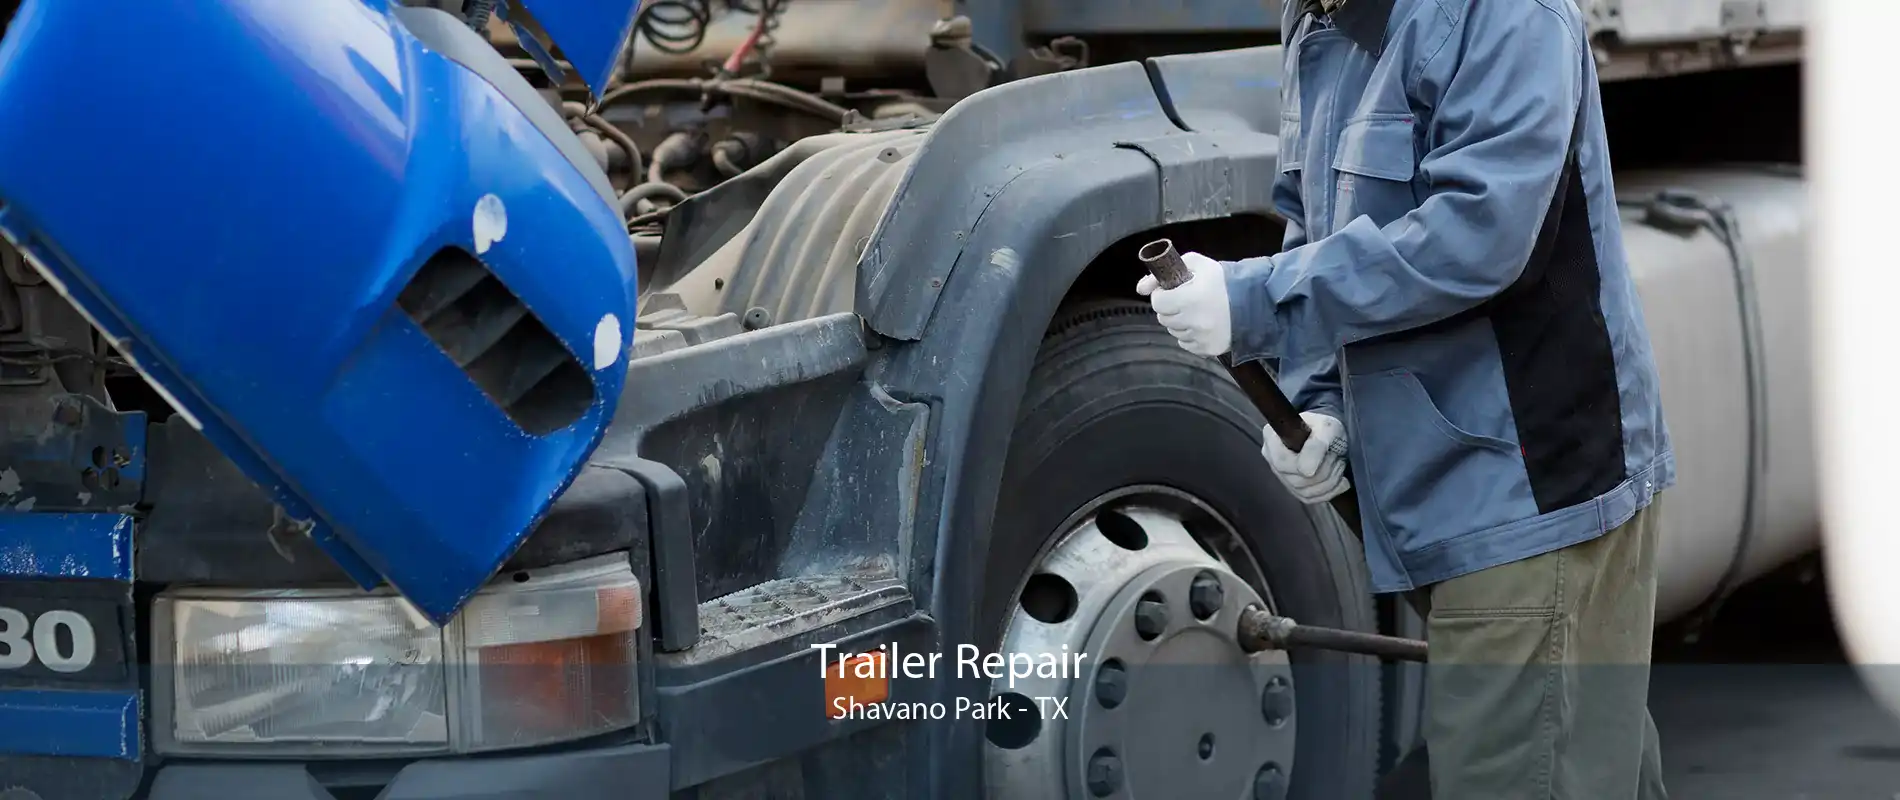 Trailer Repair Shavano Park - TX